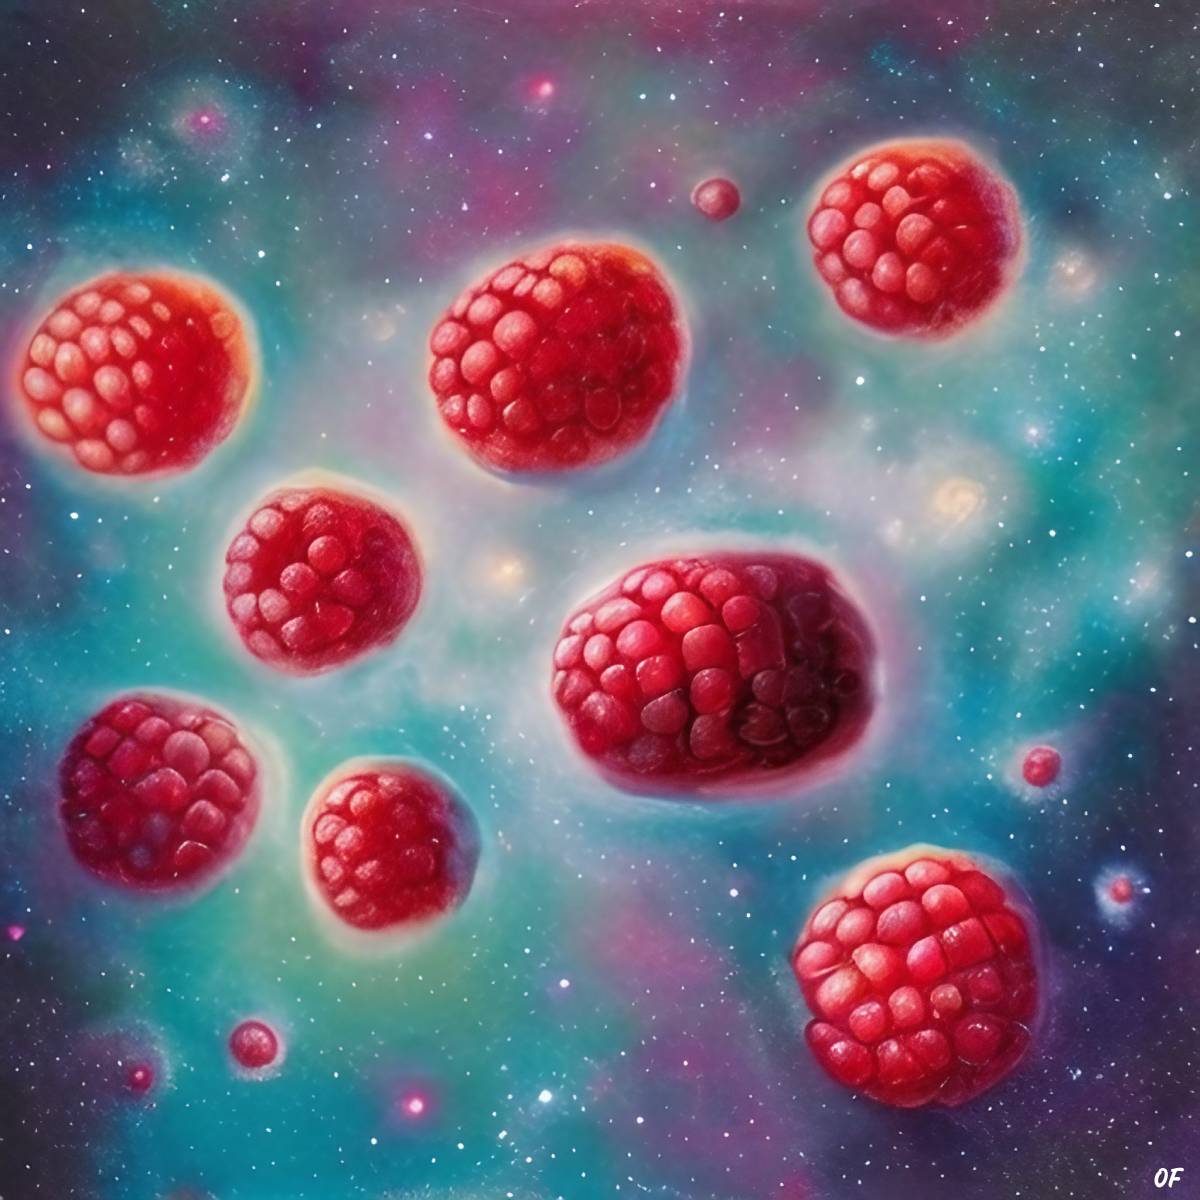 Oil painting of raspberries floating through space.